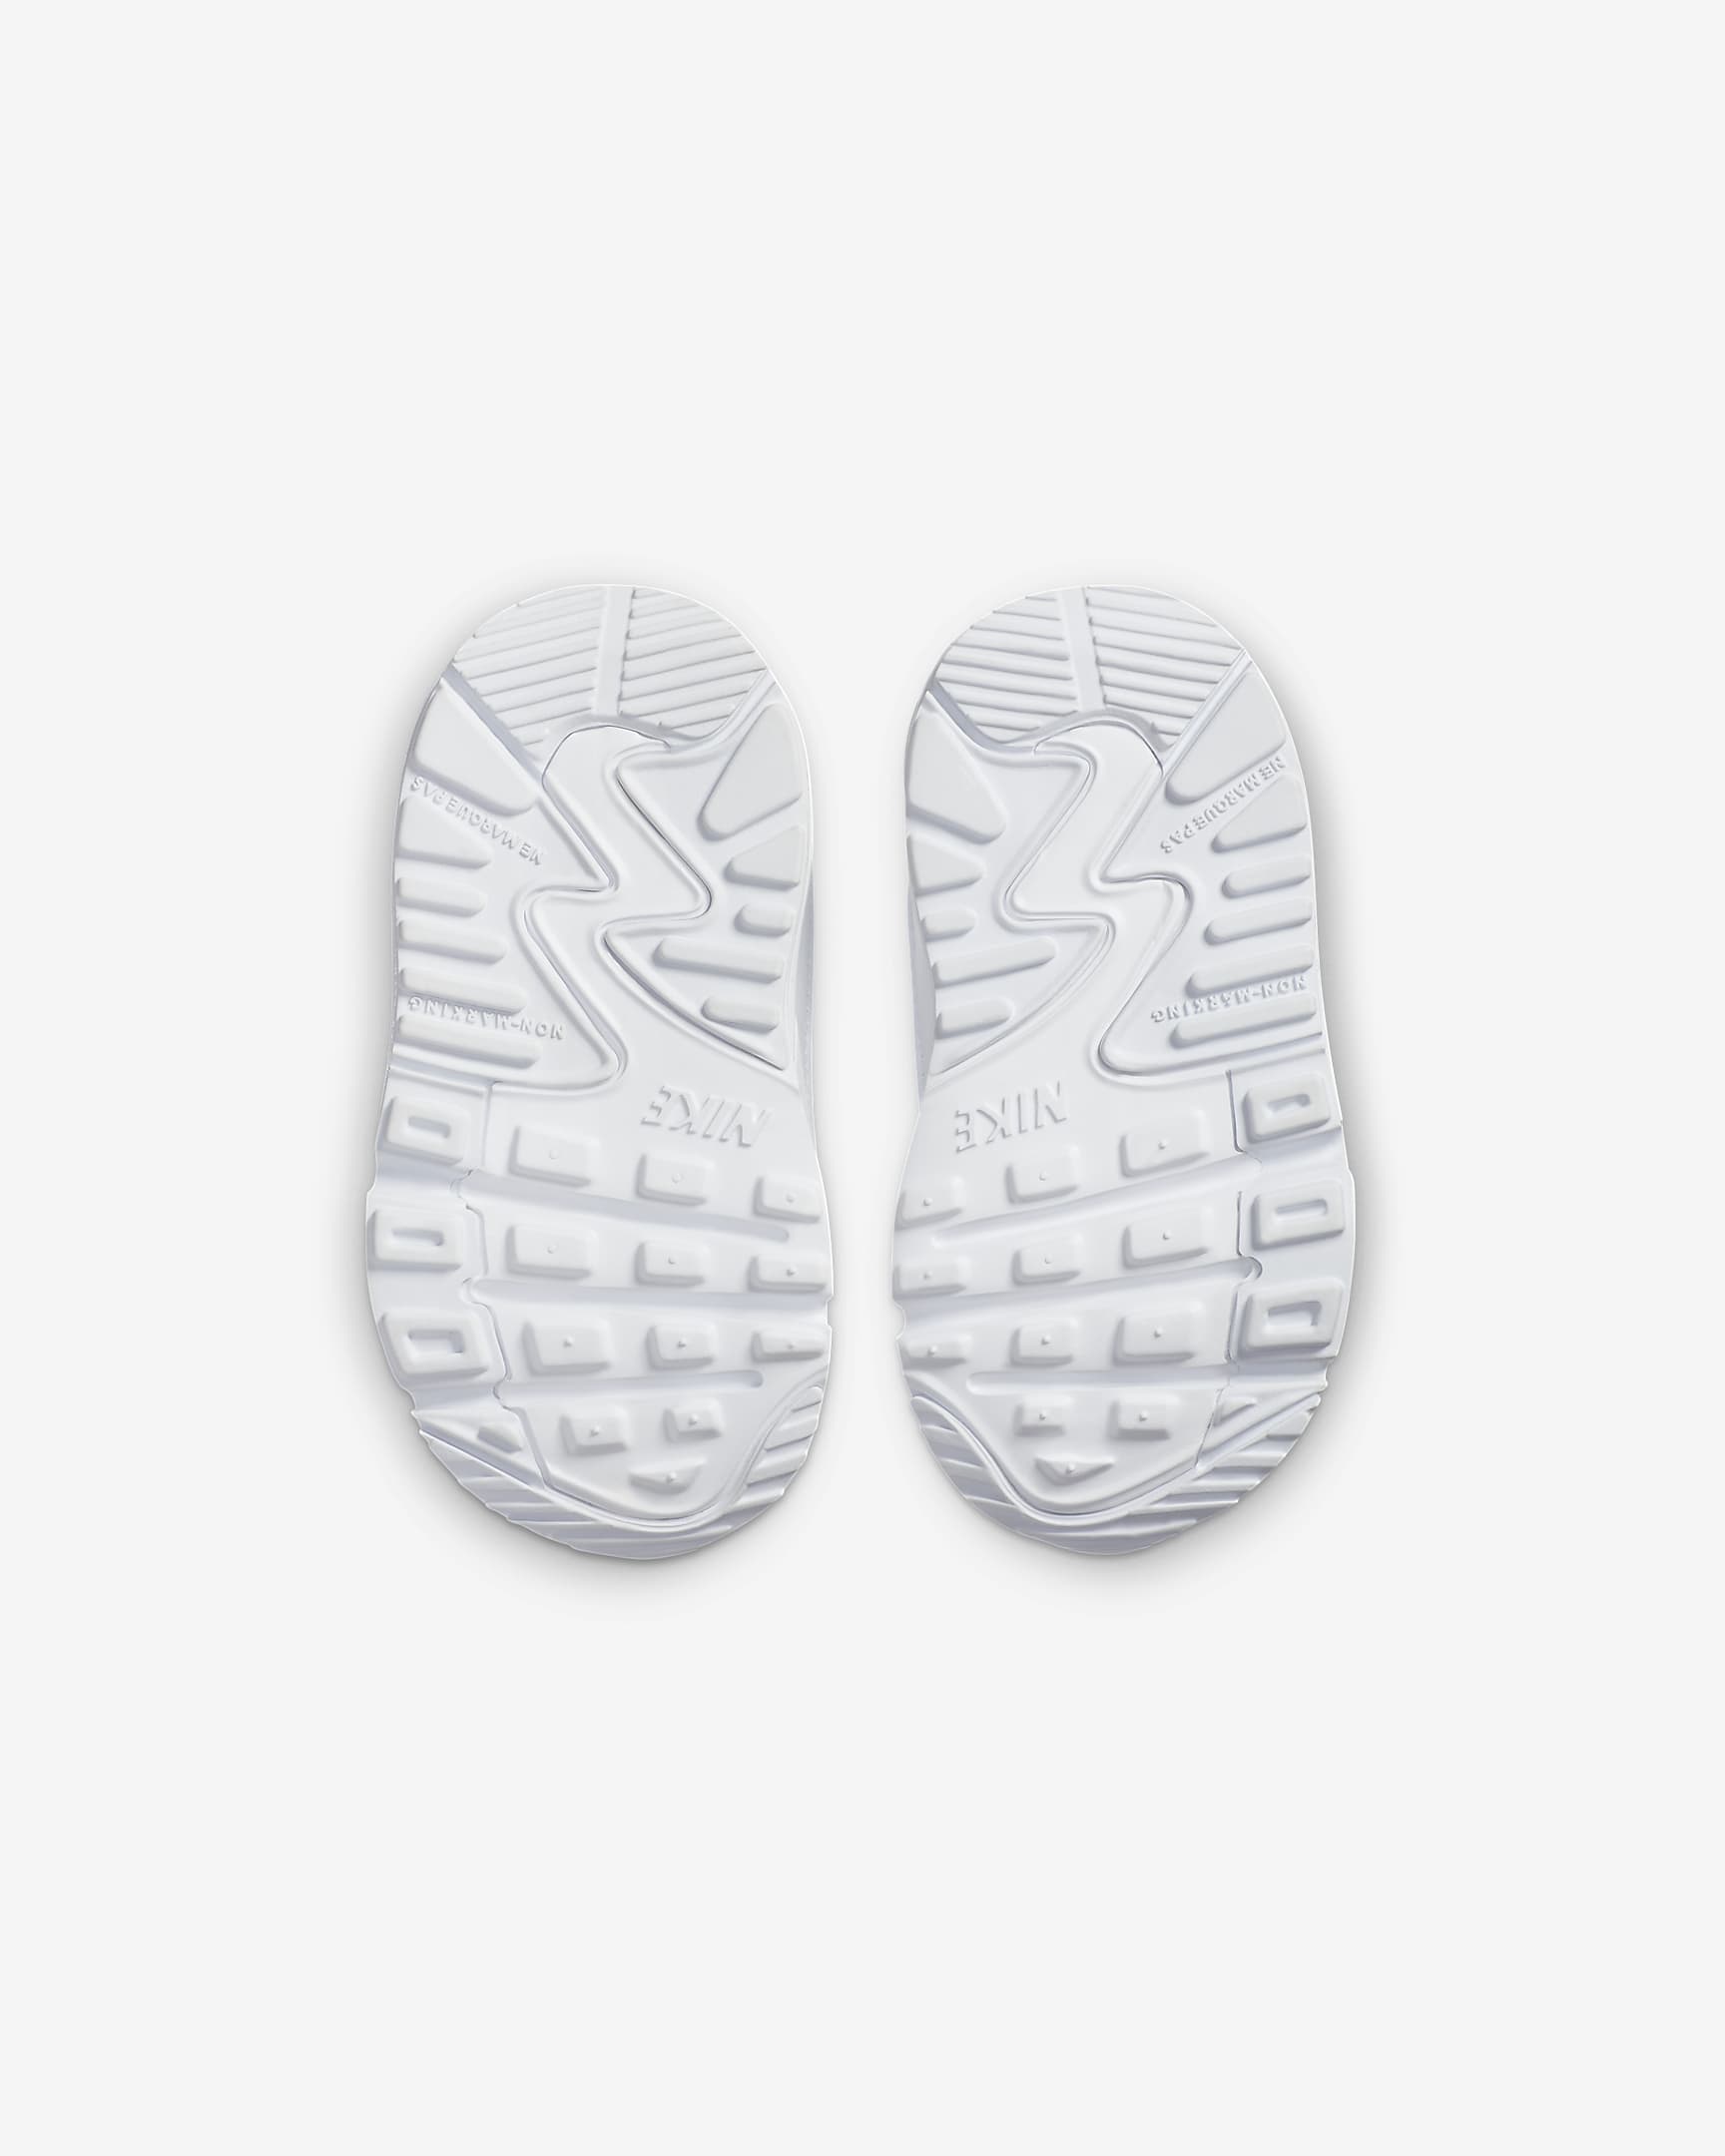 Nike Air Max 90 LTR Baby/Toddler Shoes - White/Metallic Silver/White/White